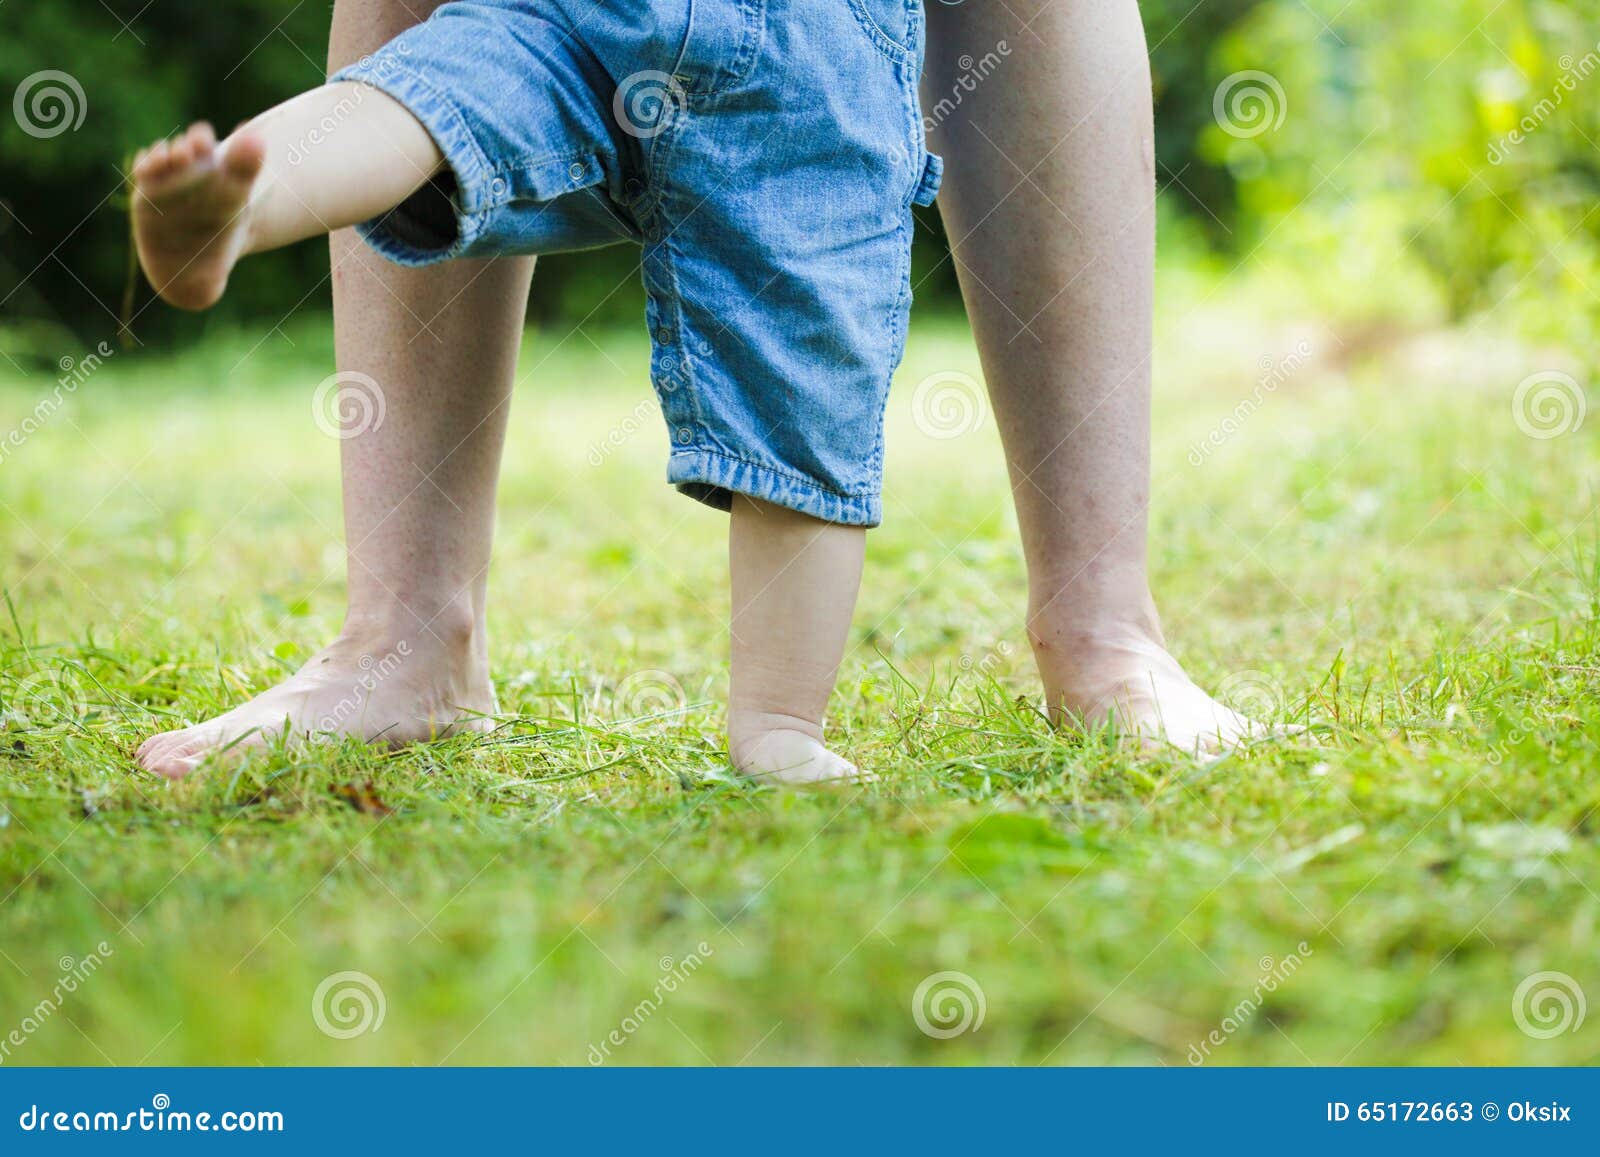 1 first step. Первые шаги ребенка. Детские ноги первые шаги. Первый шаг картинка. Первый шаг нога.